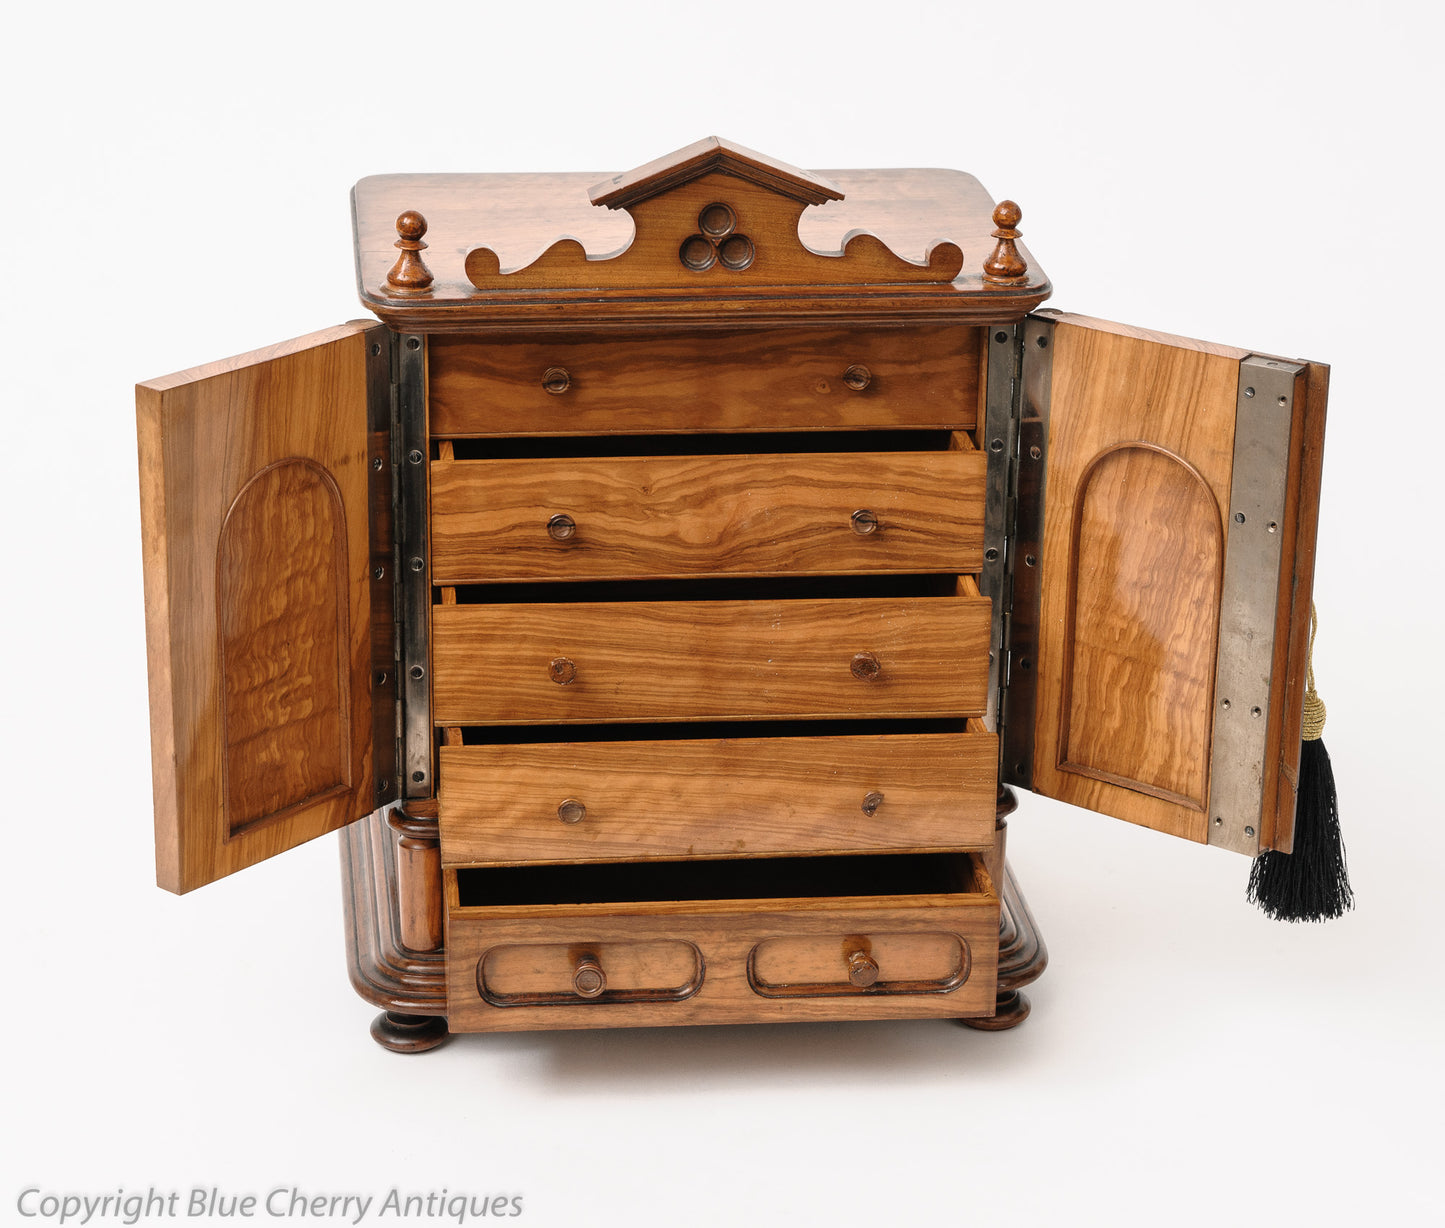 Antique Miniature Figured Walnut Armoire Table Top Cabinet / Jewellery Box (Code 1558)